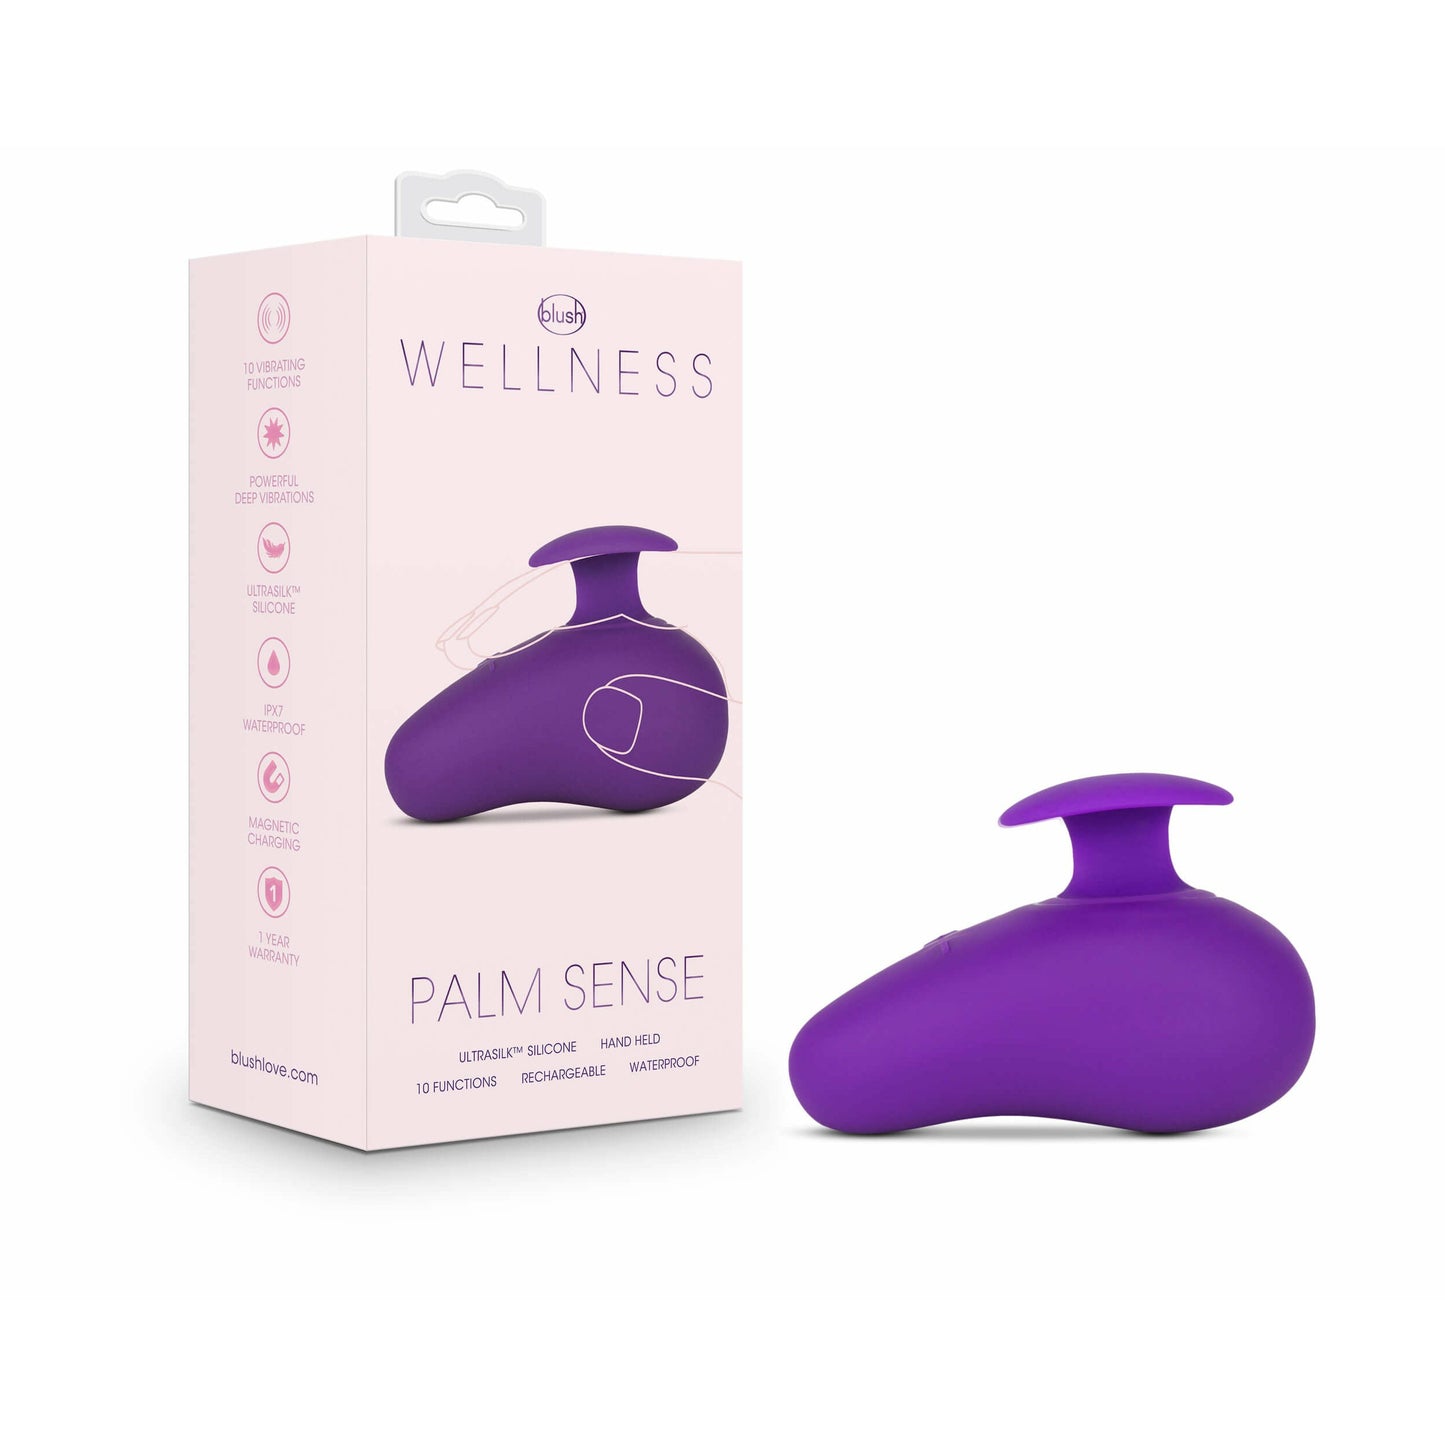 Blush Wellness Palm Sense Vibrator